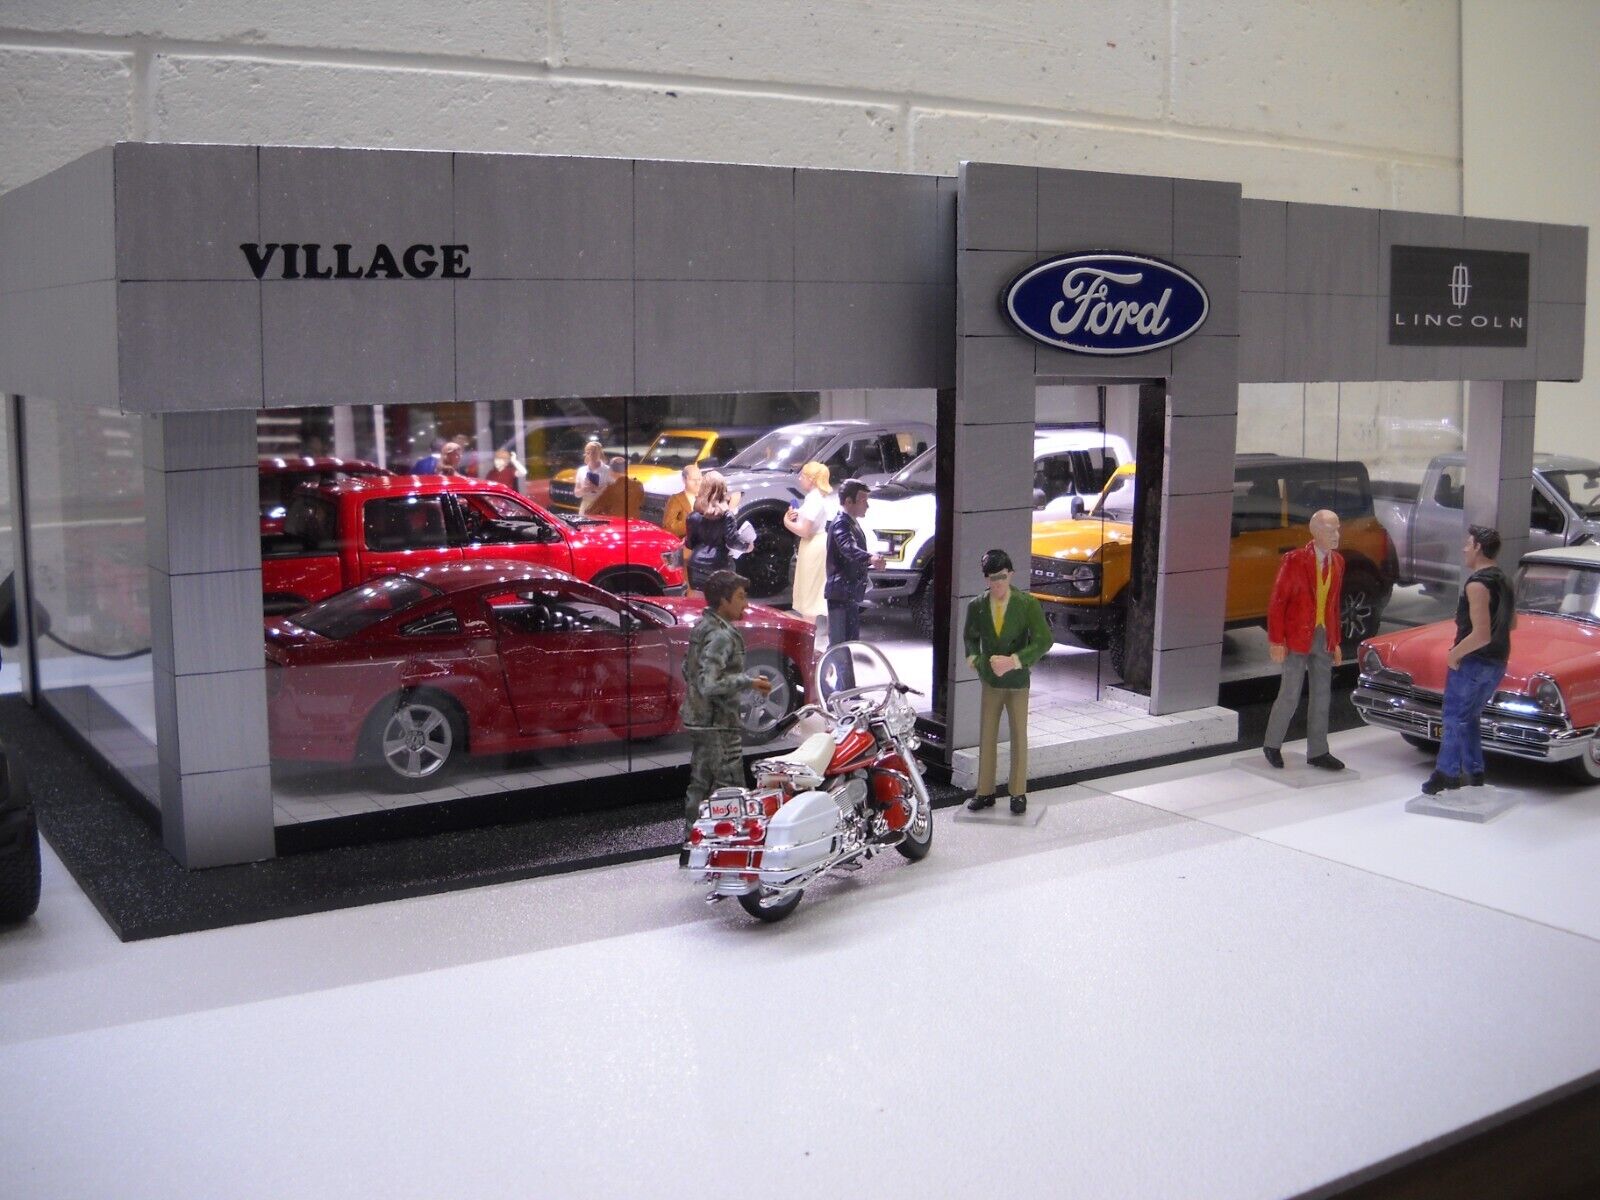 Ford Lincoln modern dealership 1/25 1/24th custom-built scale model car diorama